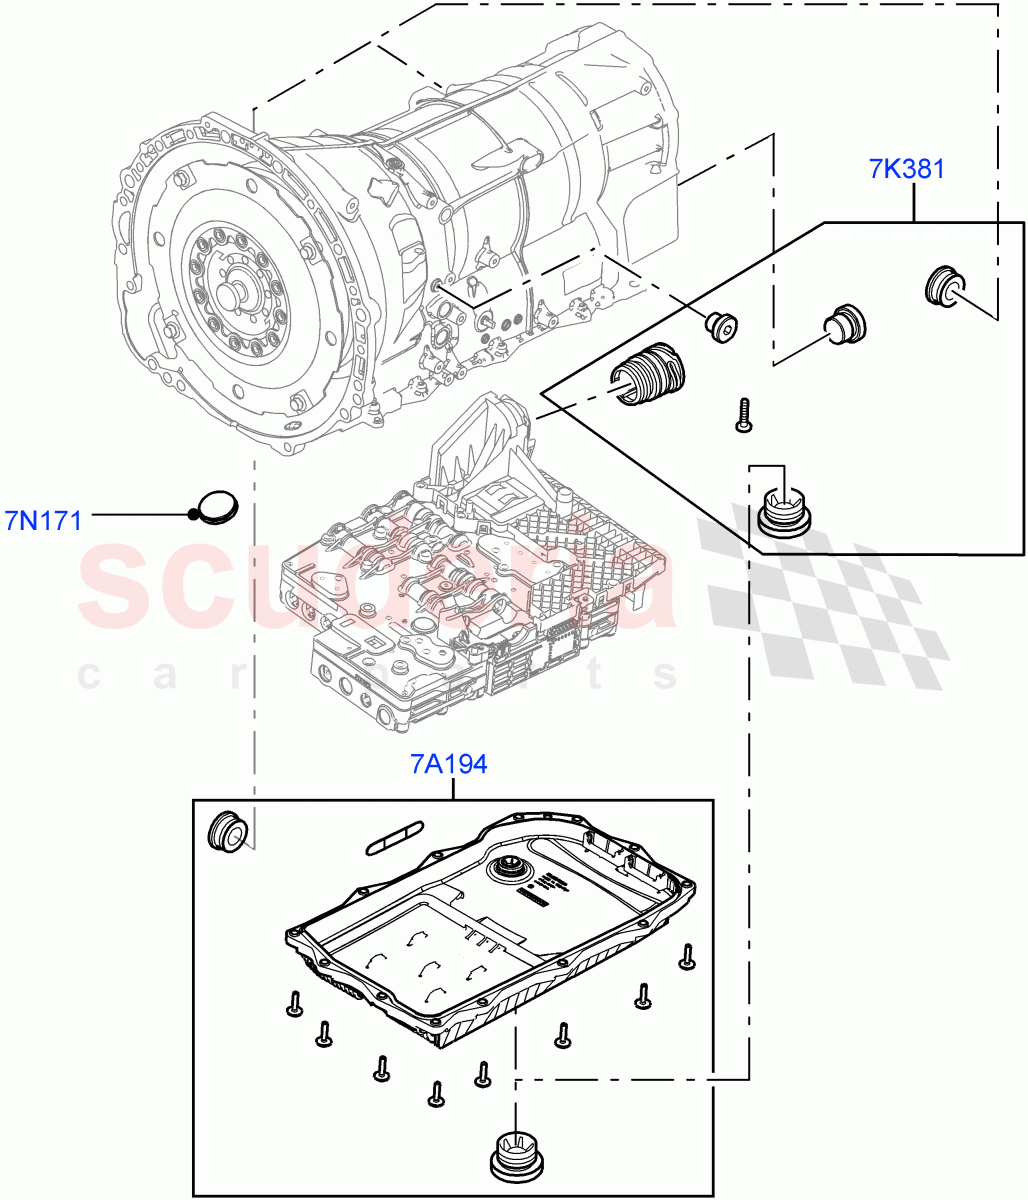 Transmission External Components(5.0L P AJ133 DOHC CDA S/C Enhanced,8 Speed Auto Trans ZF 8HP70 4WD)((V)FROMKA000001) of Land Rover Land Rover Range Rover Velar (2017+) [3.0 Diesel 24V DOHC TC]